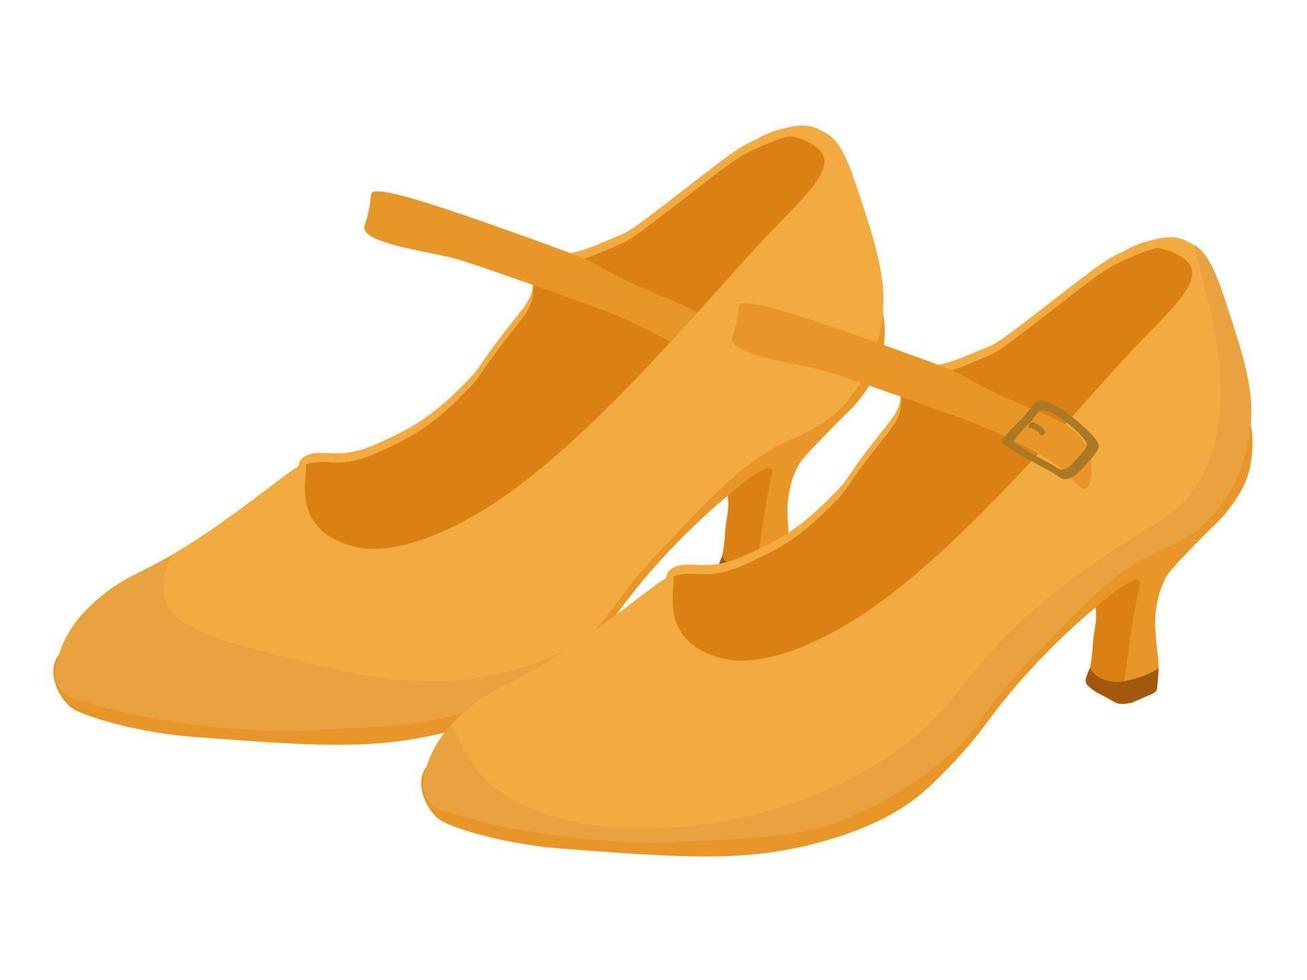 zapatos de baile para mujer en naranja, un par de zapatos de baile vector